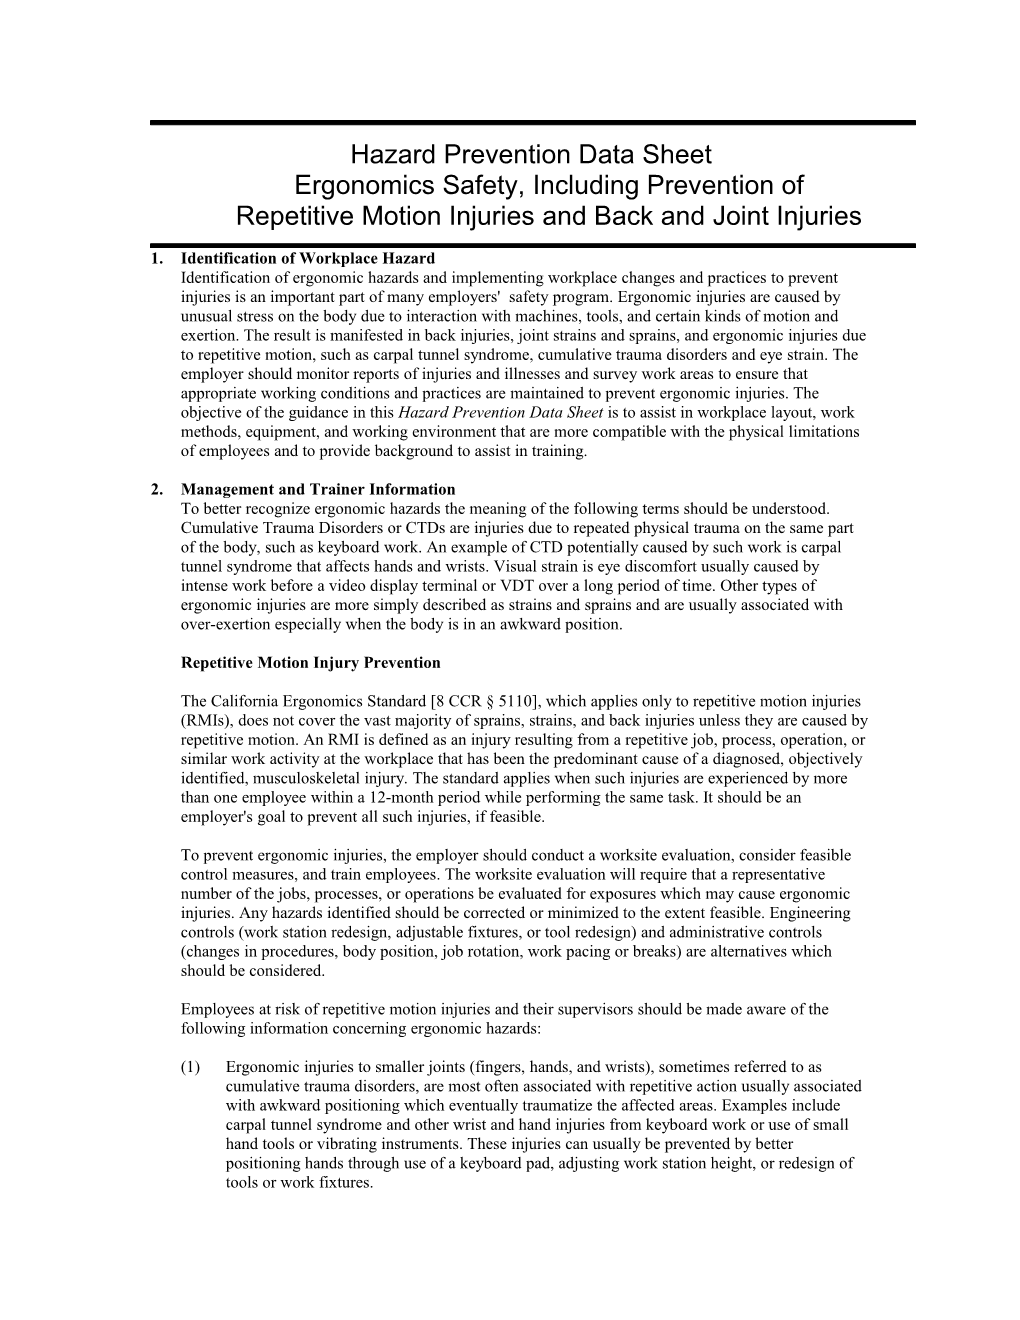 Hazard Prevention Data Sheet Ergonomics Safety, Including Prevention of Repetitive Motion